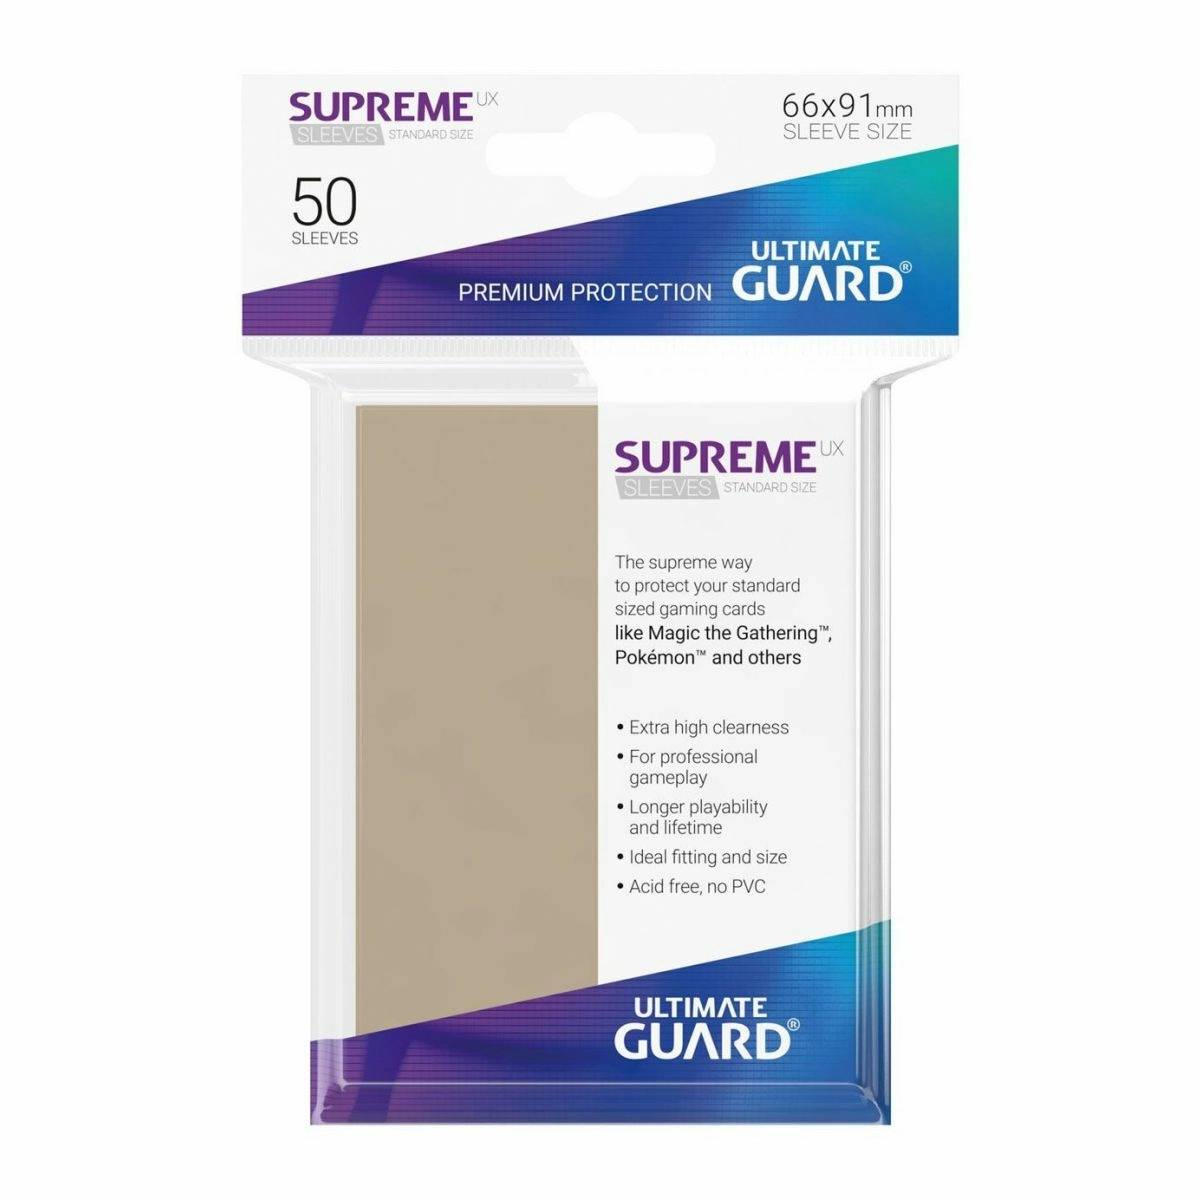 Ultimate Guard - Supreme UX Standard Sleeves Sand (50)